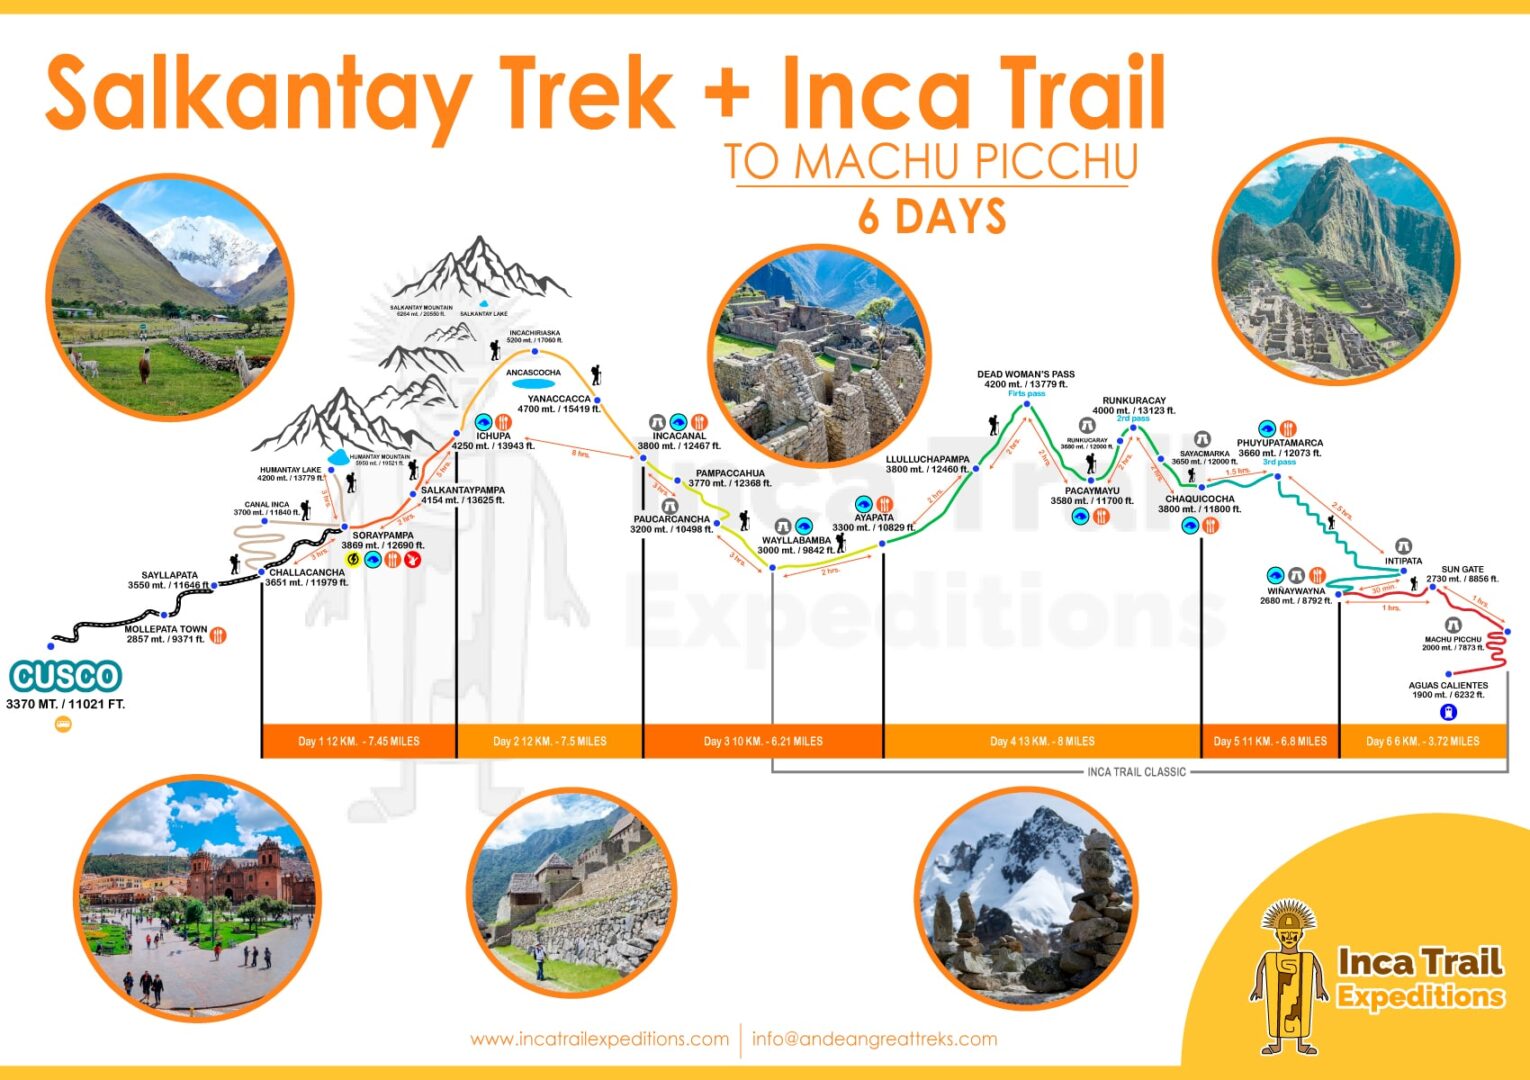 SALKANTAY-TREK-INCA-TRAIL-6-DAYS-BY-INCA-TRAIL-EXPEDITIONS